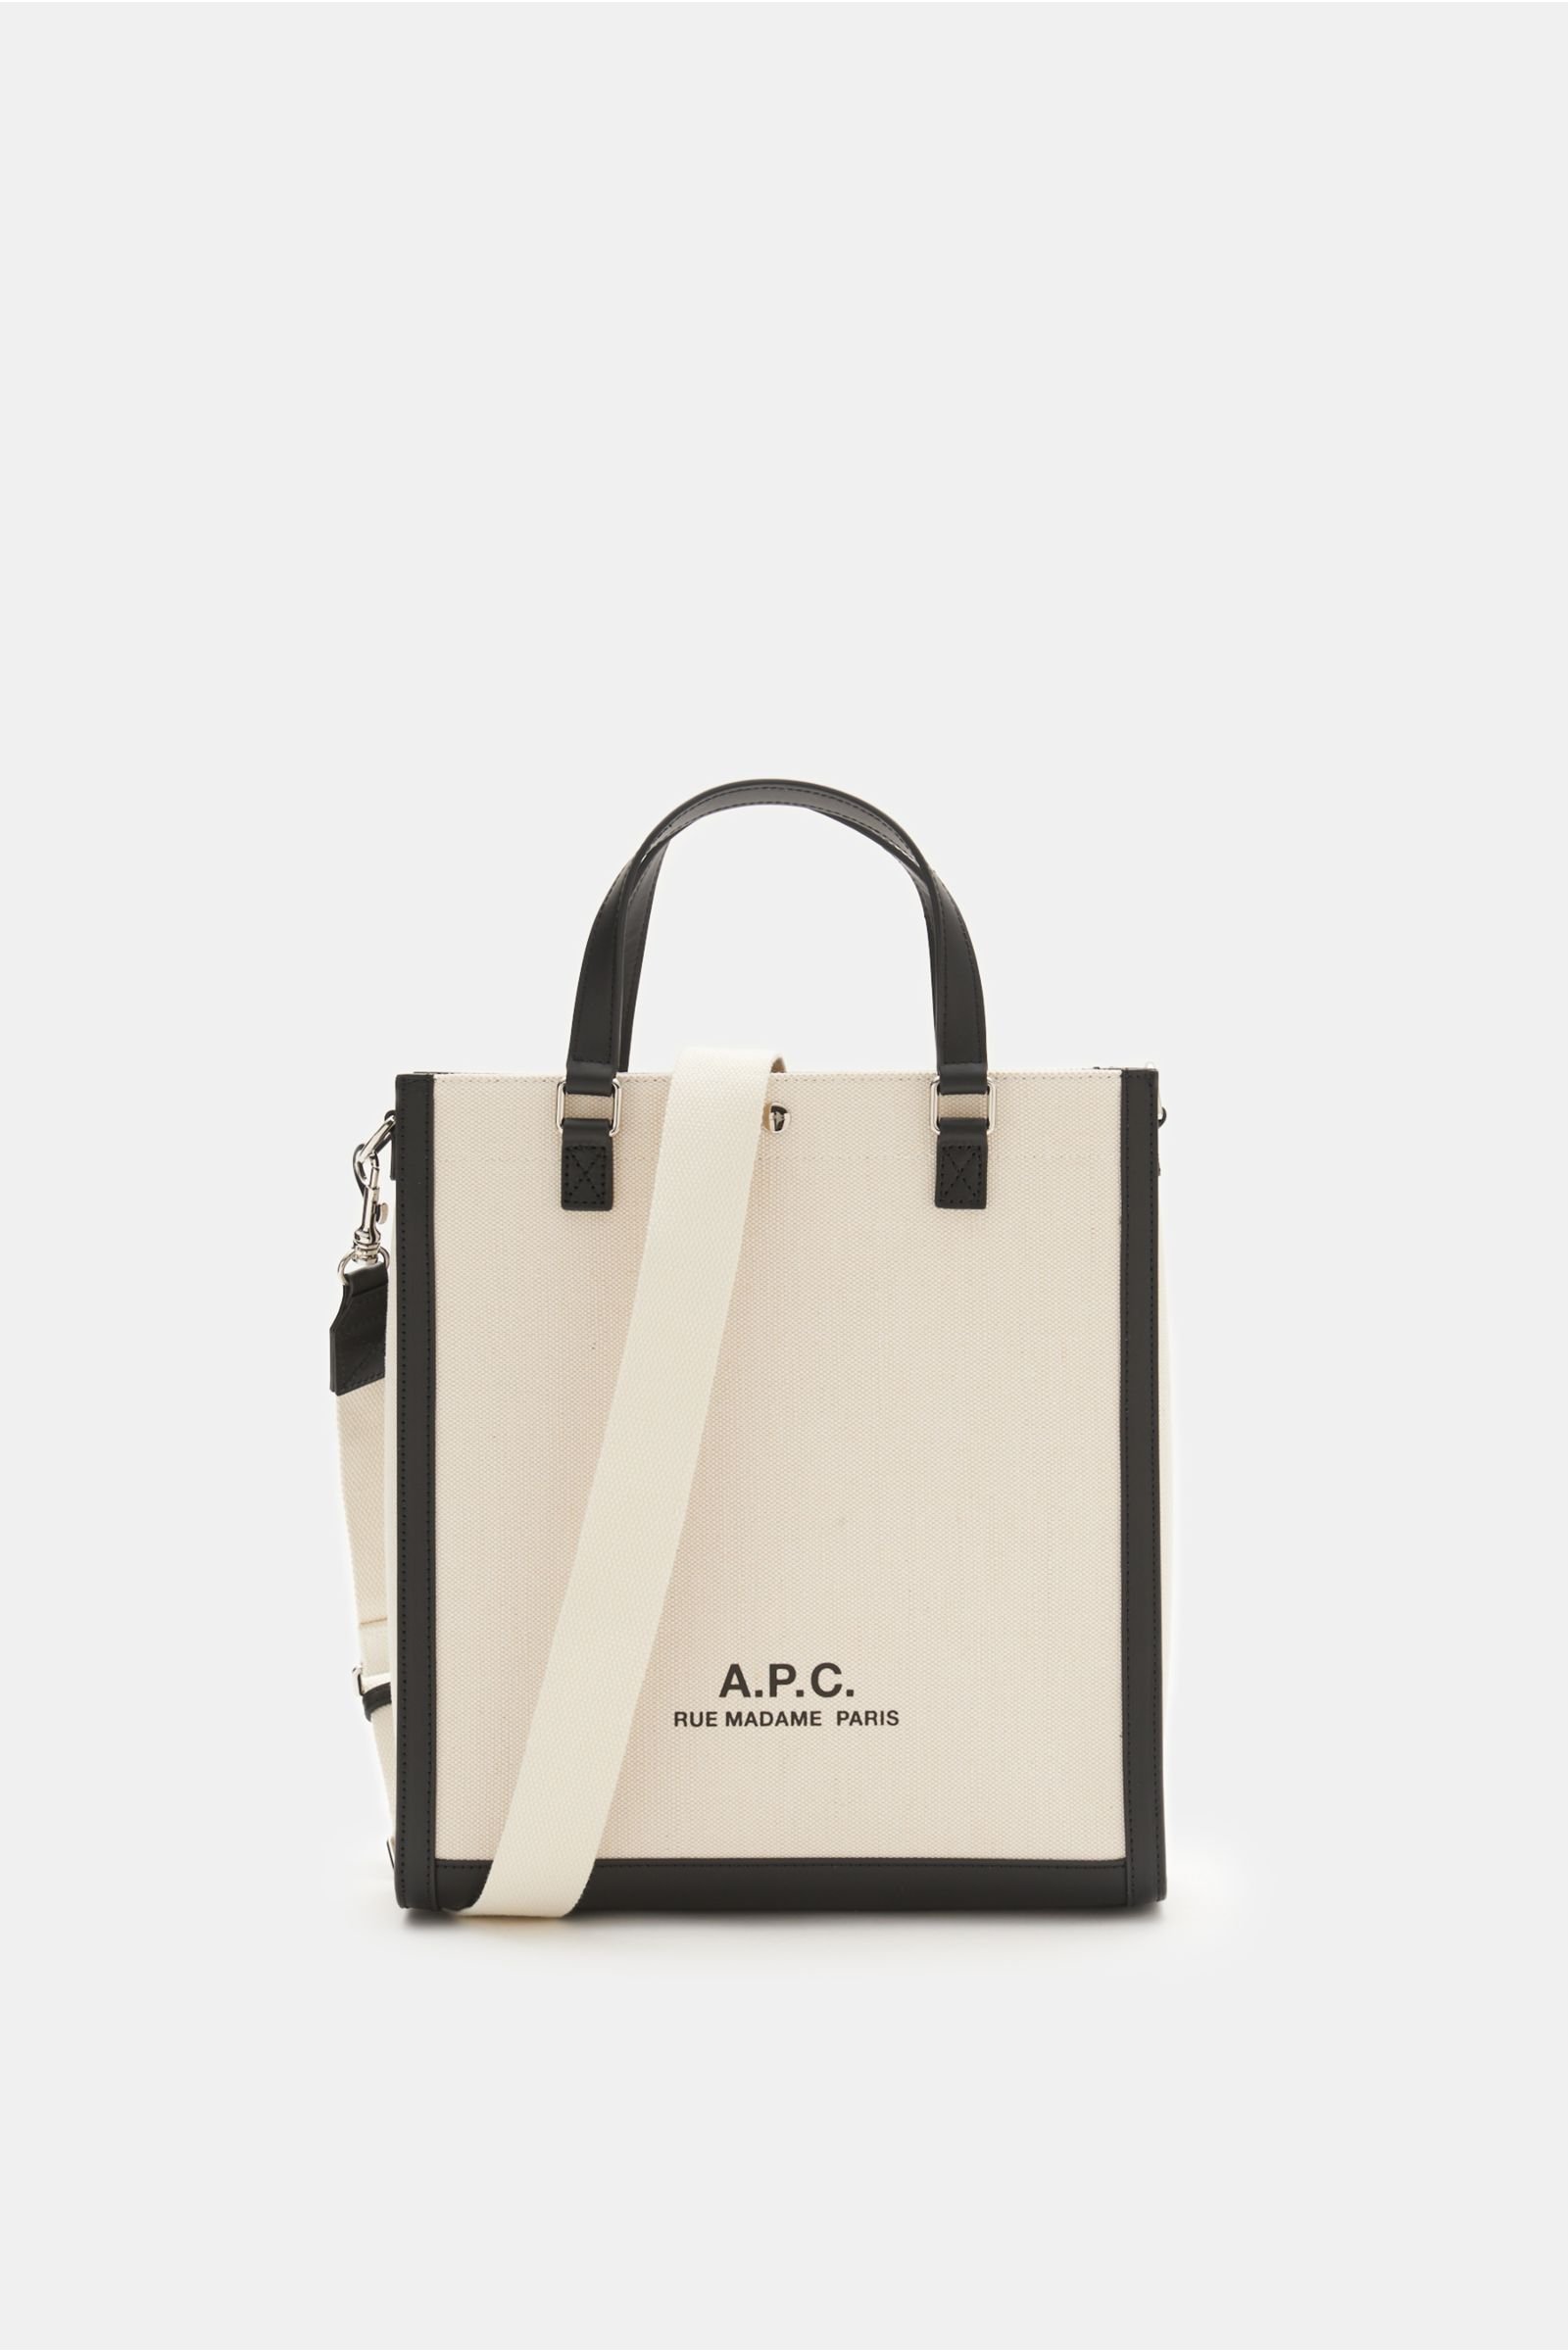 A.P.C. Canvas tote bag 'Camille' cream/black